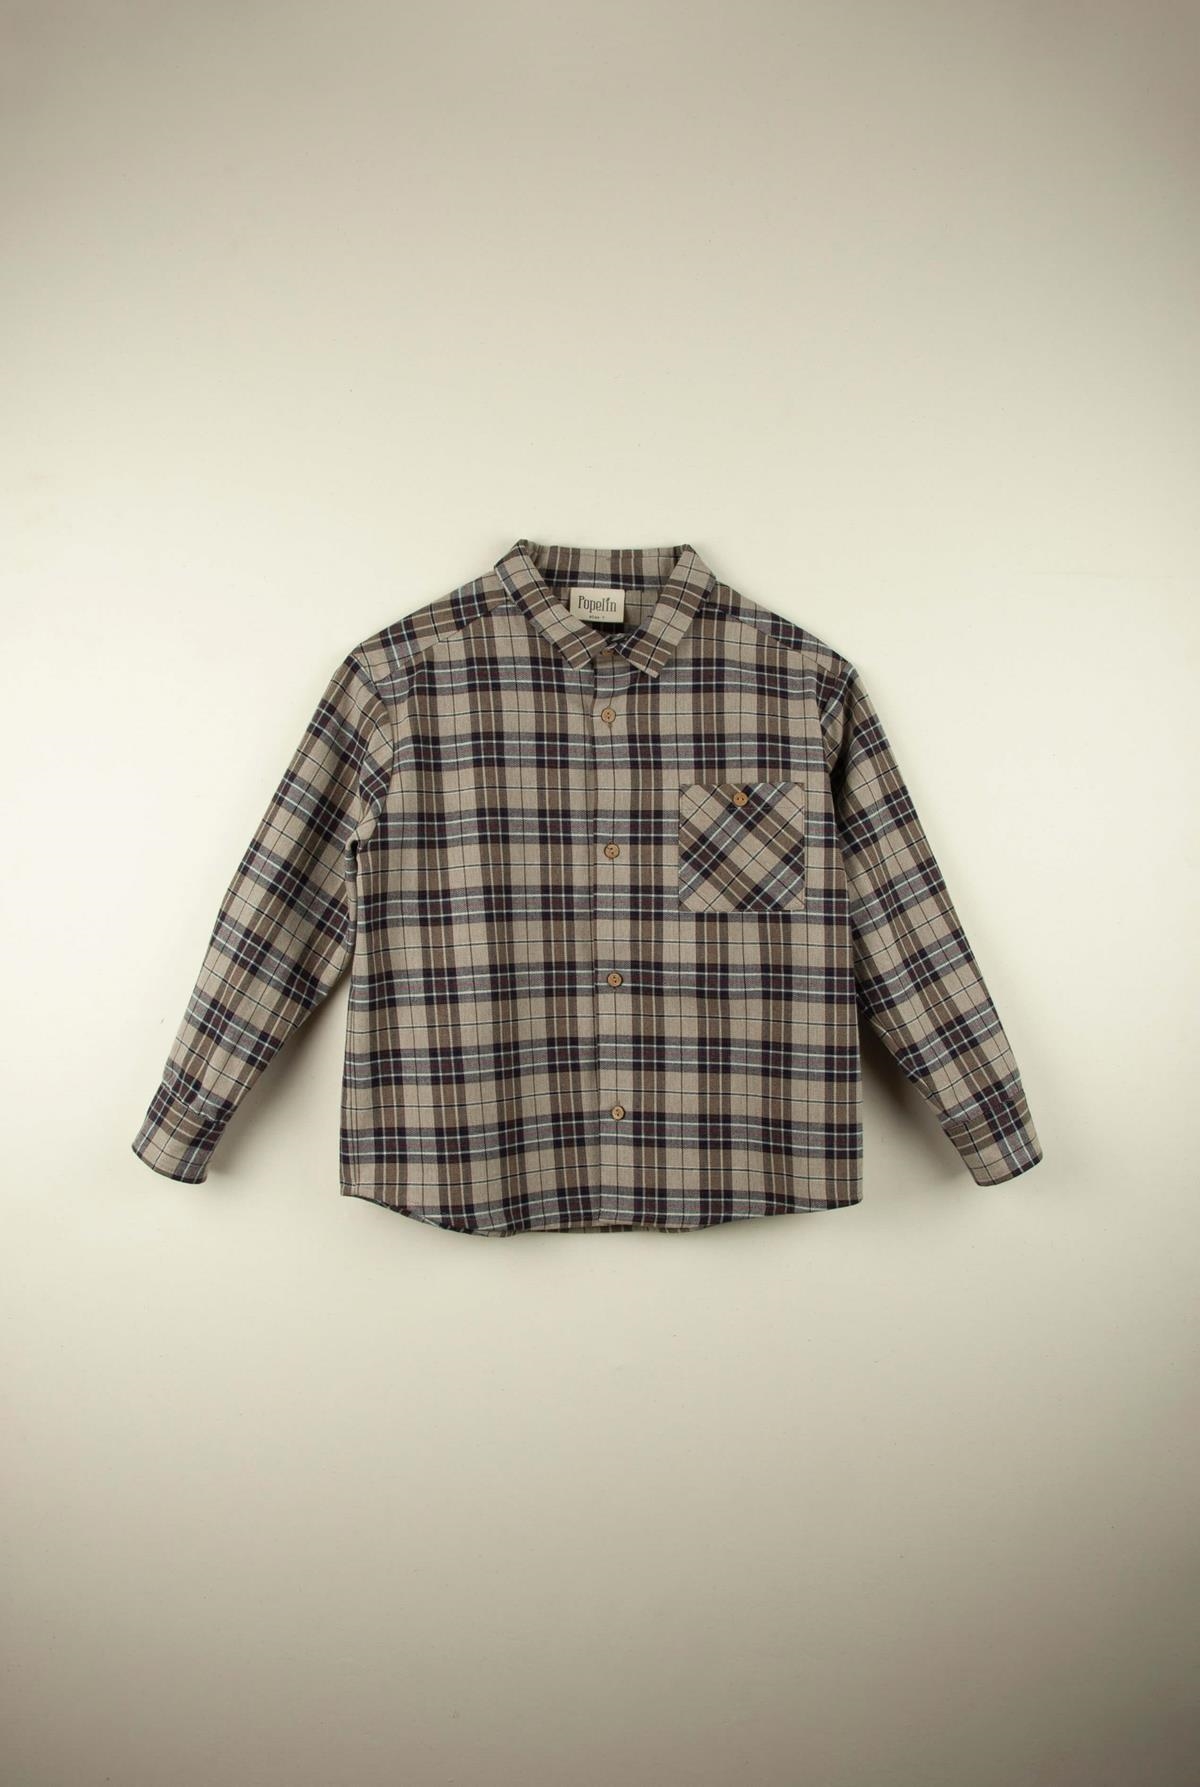 Mod.15.2 Plaid shirt | AW21.22 Mod.15.2 Plaid shirt | 1